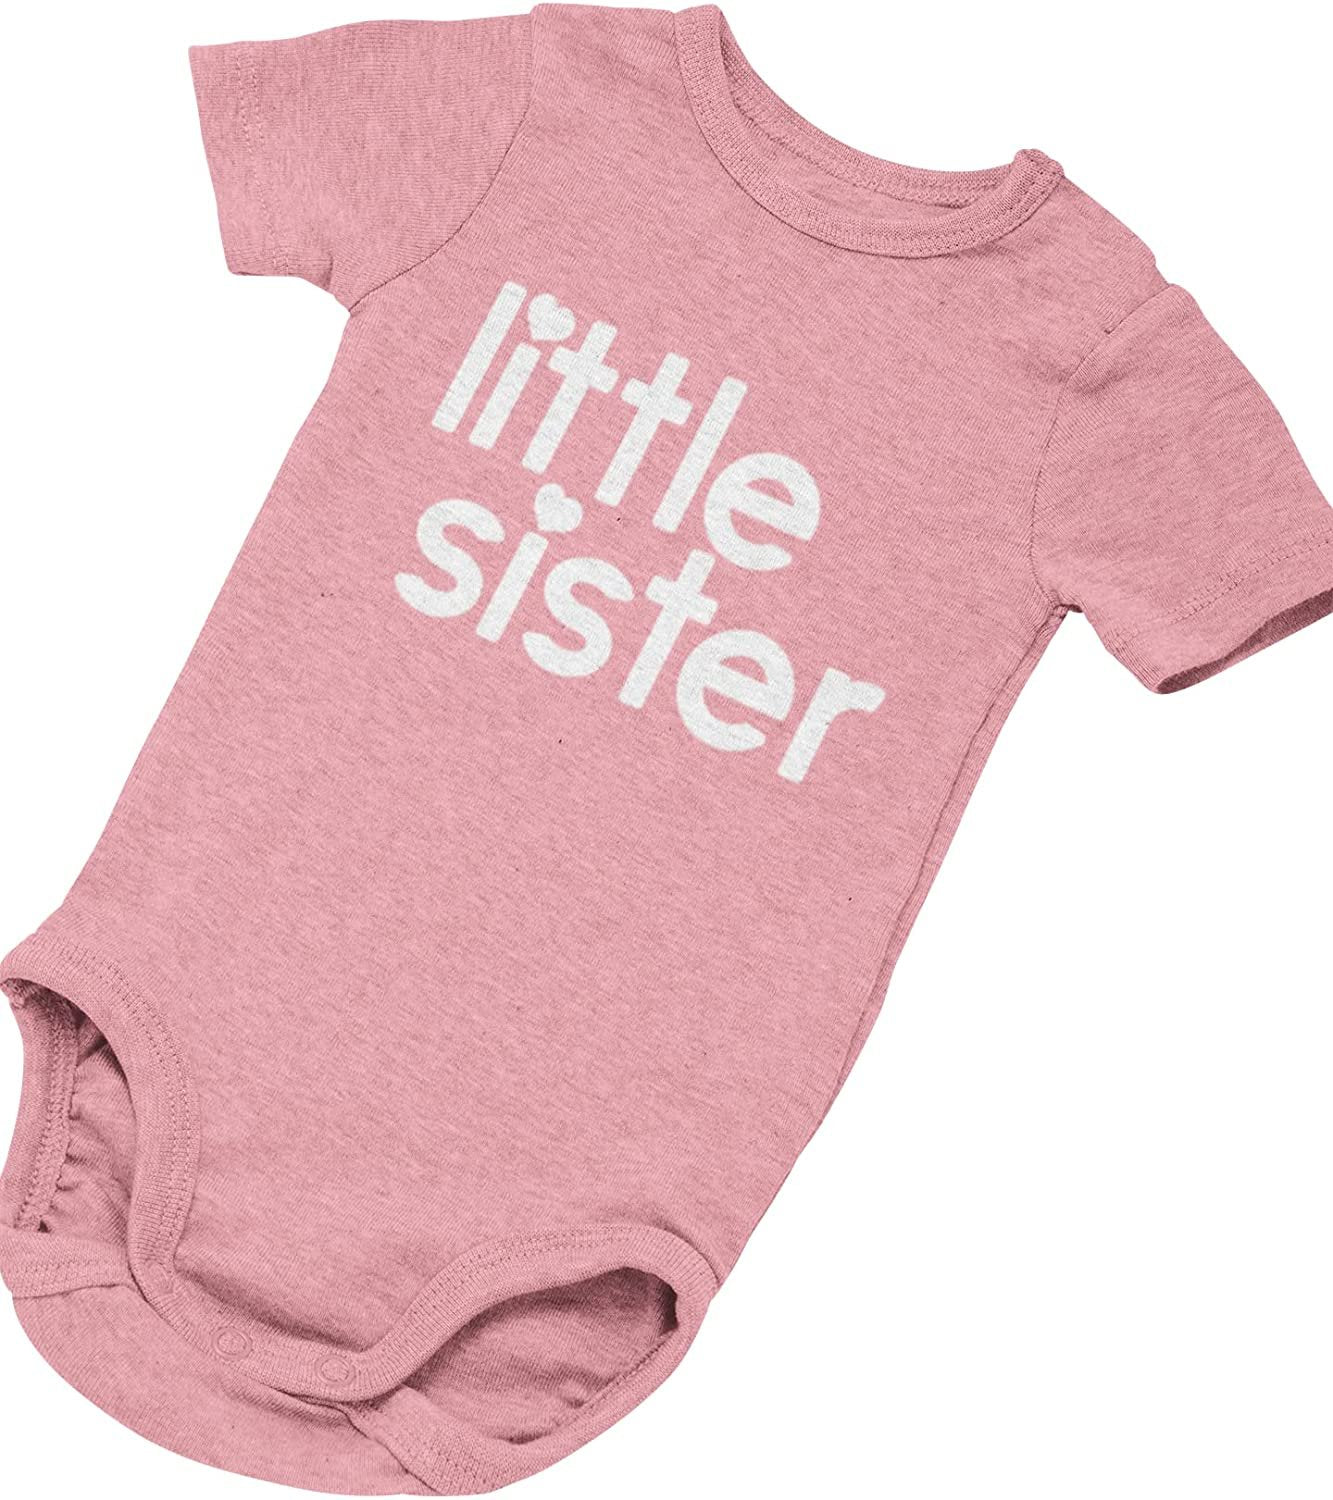 Little Sister Neugeborene Ankündigung Baby Geschenk Body (Rosa)